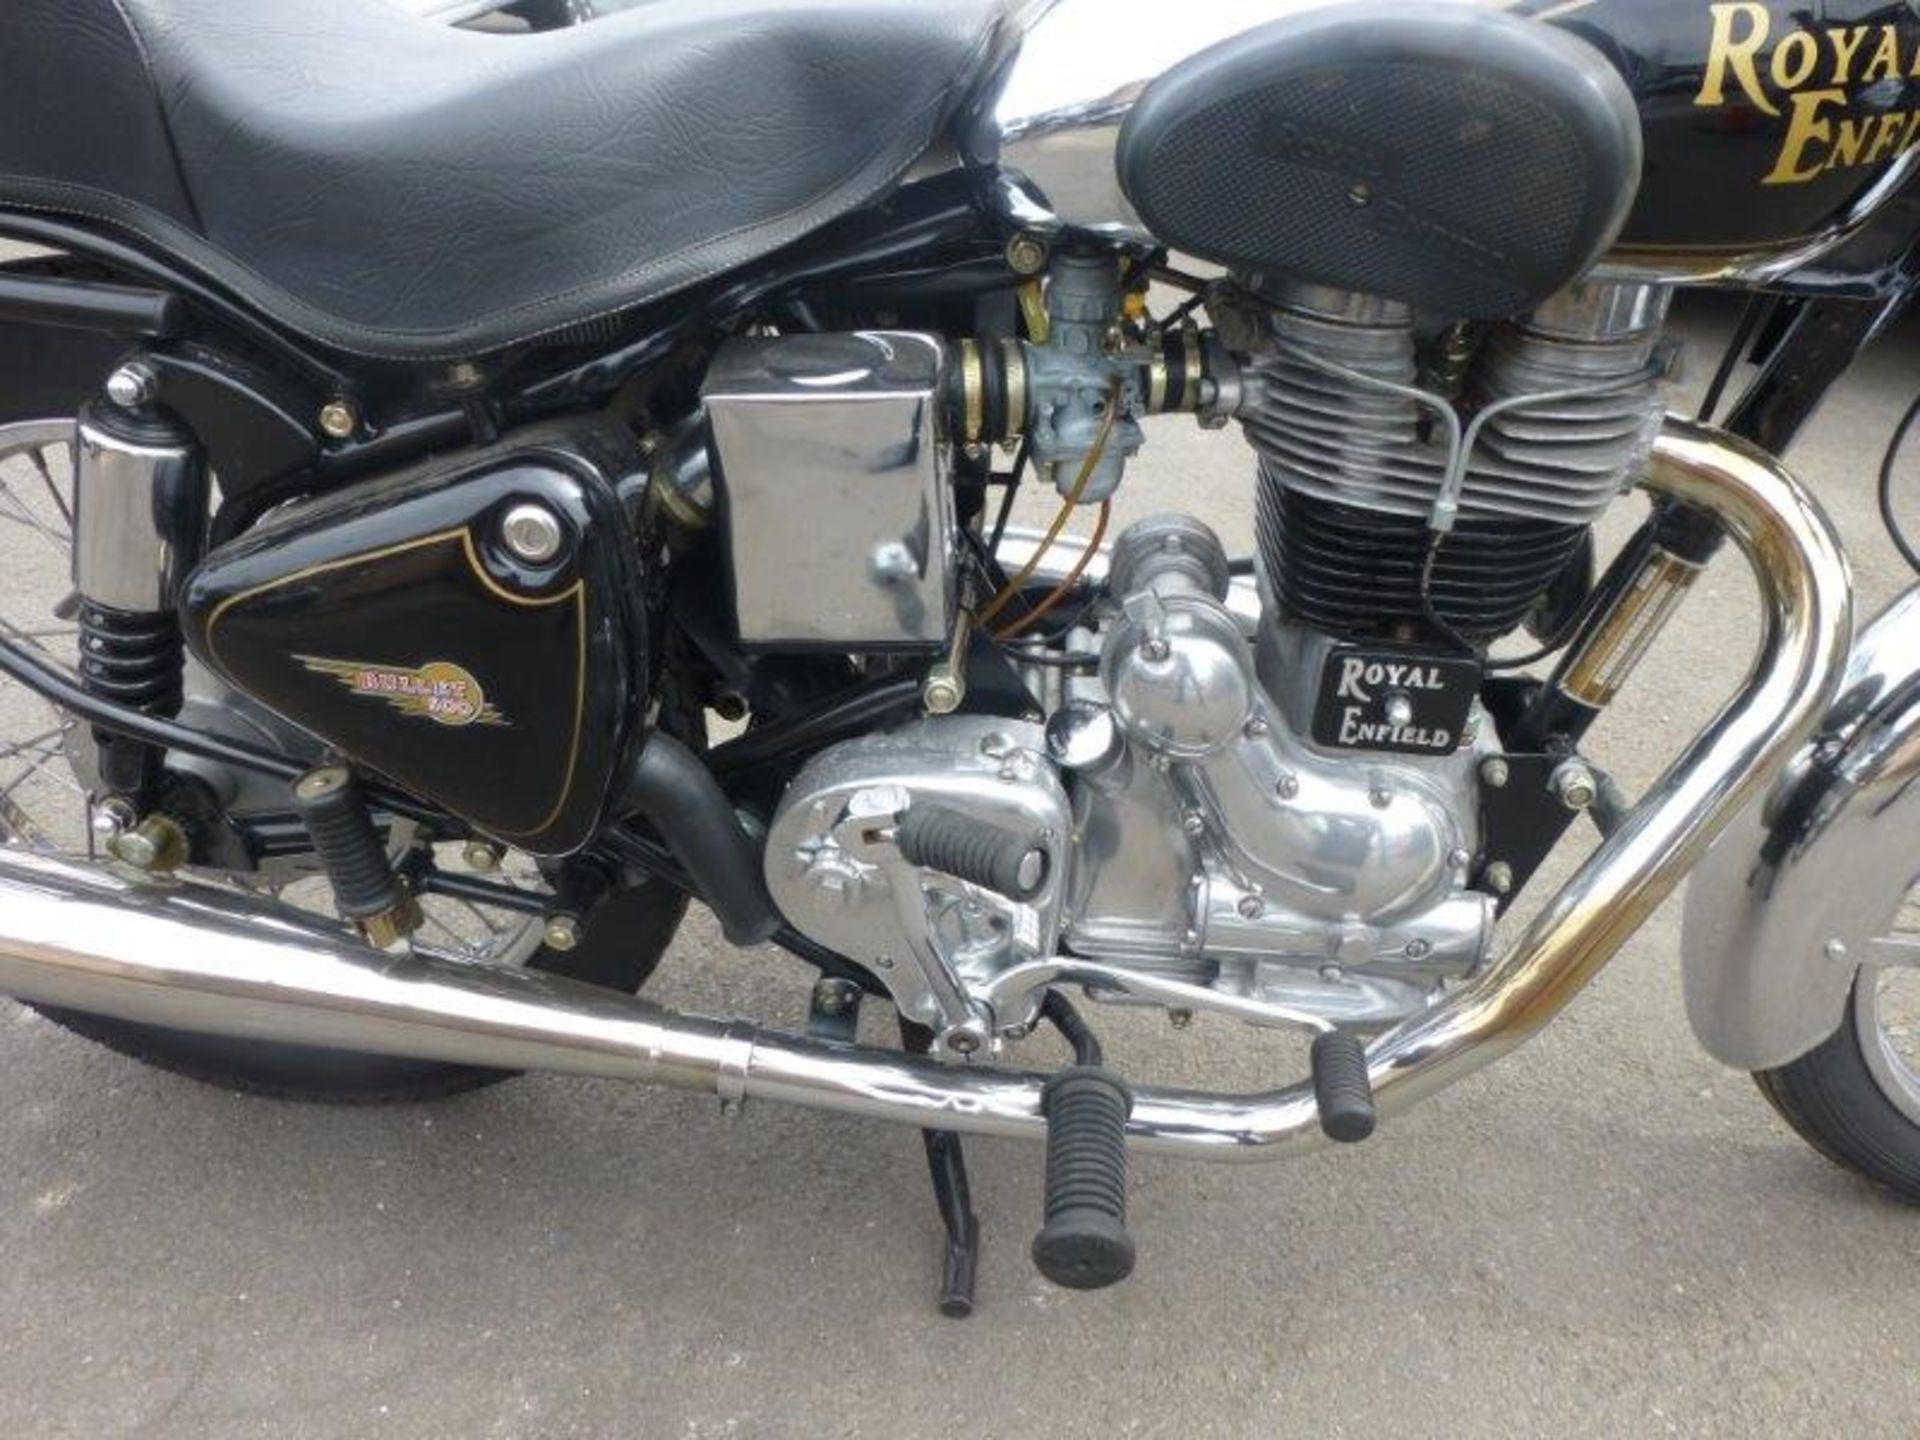 Royal Enfield Bullet 500 motorcycle, 499cc (Black)   Registration no. AO51 FXE  VIN no. - Image 4 of 7